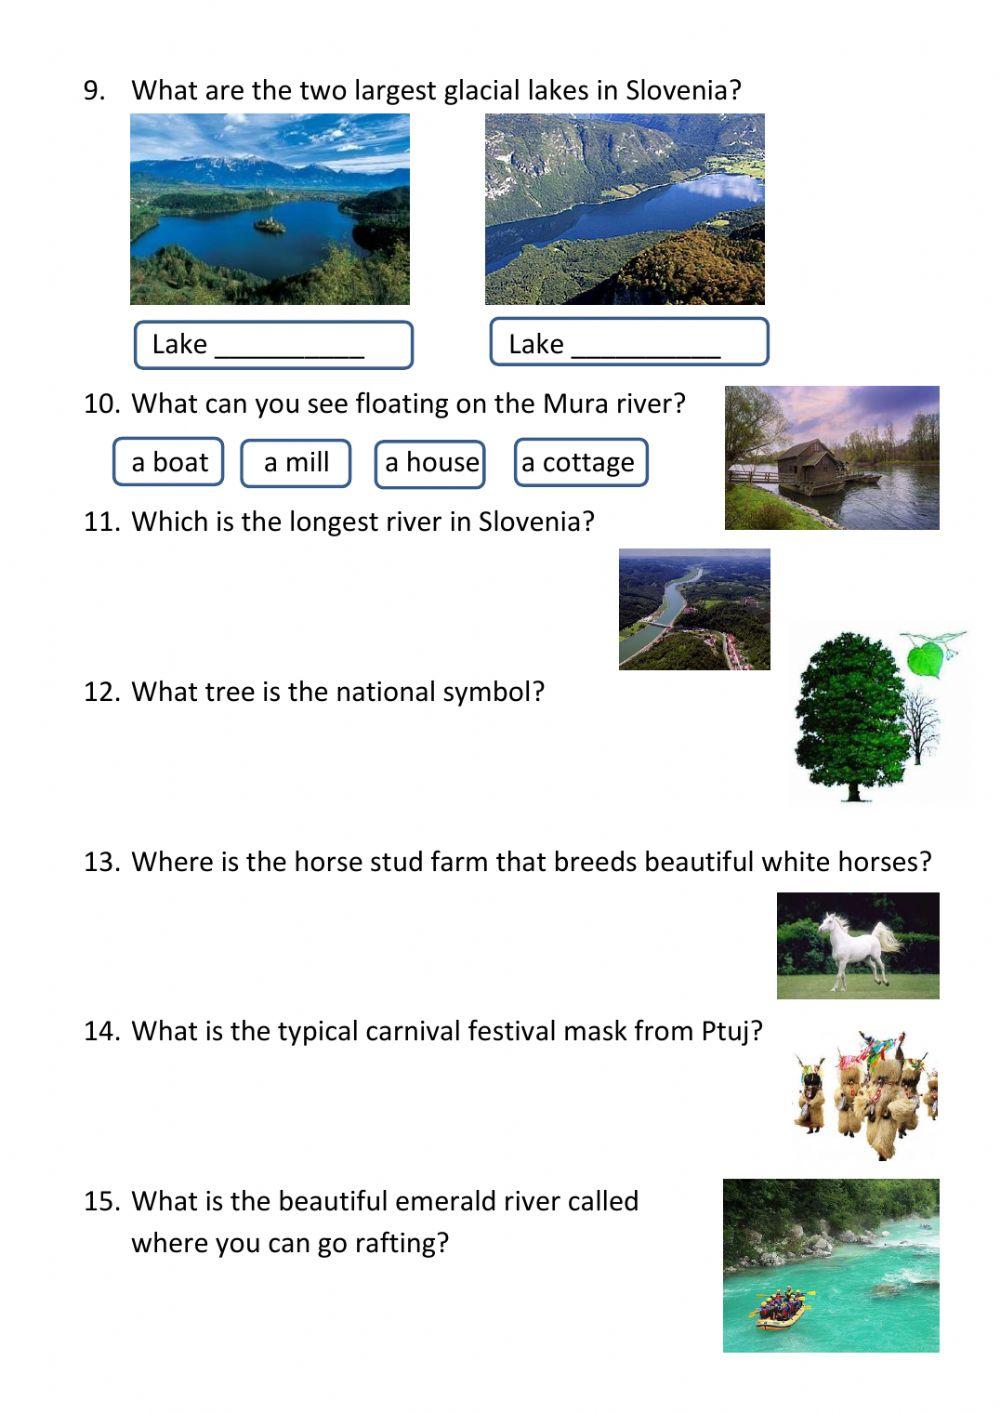 A quiz about Slovenia